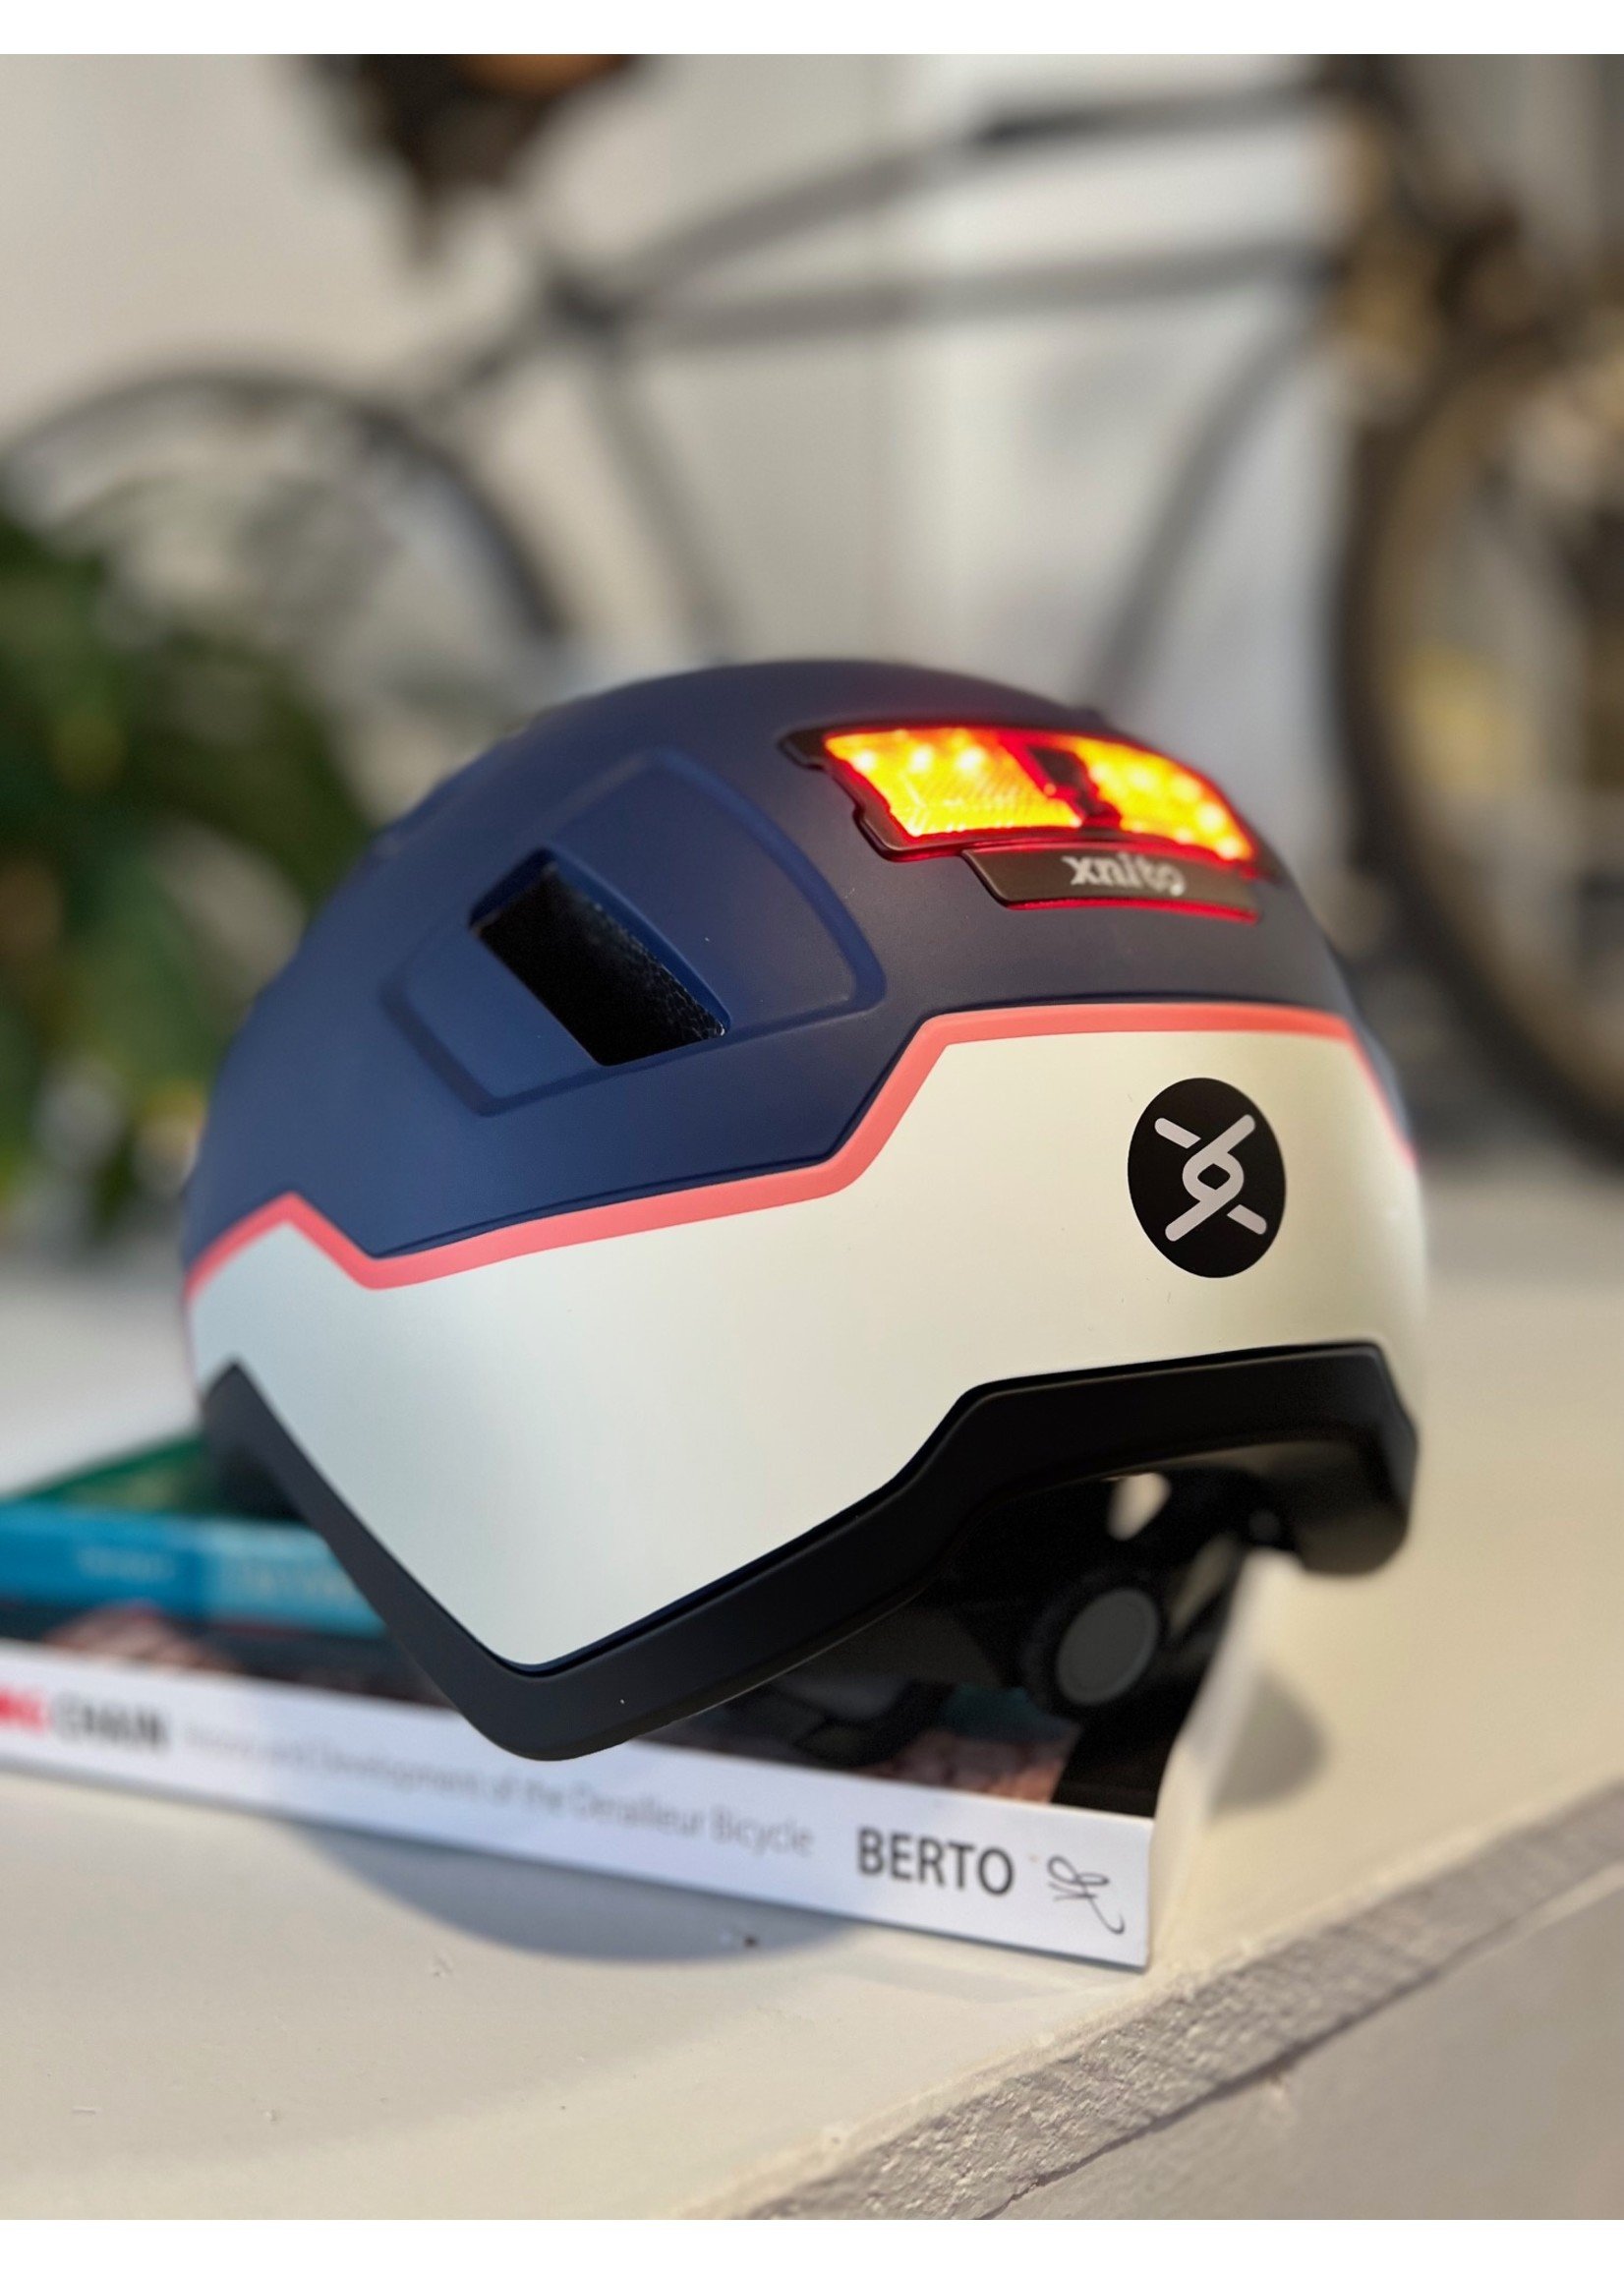 Xnito Xnito Urban helmet